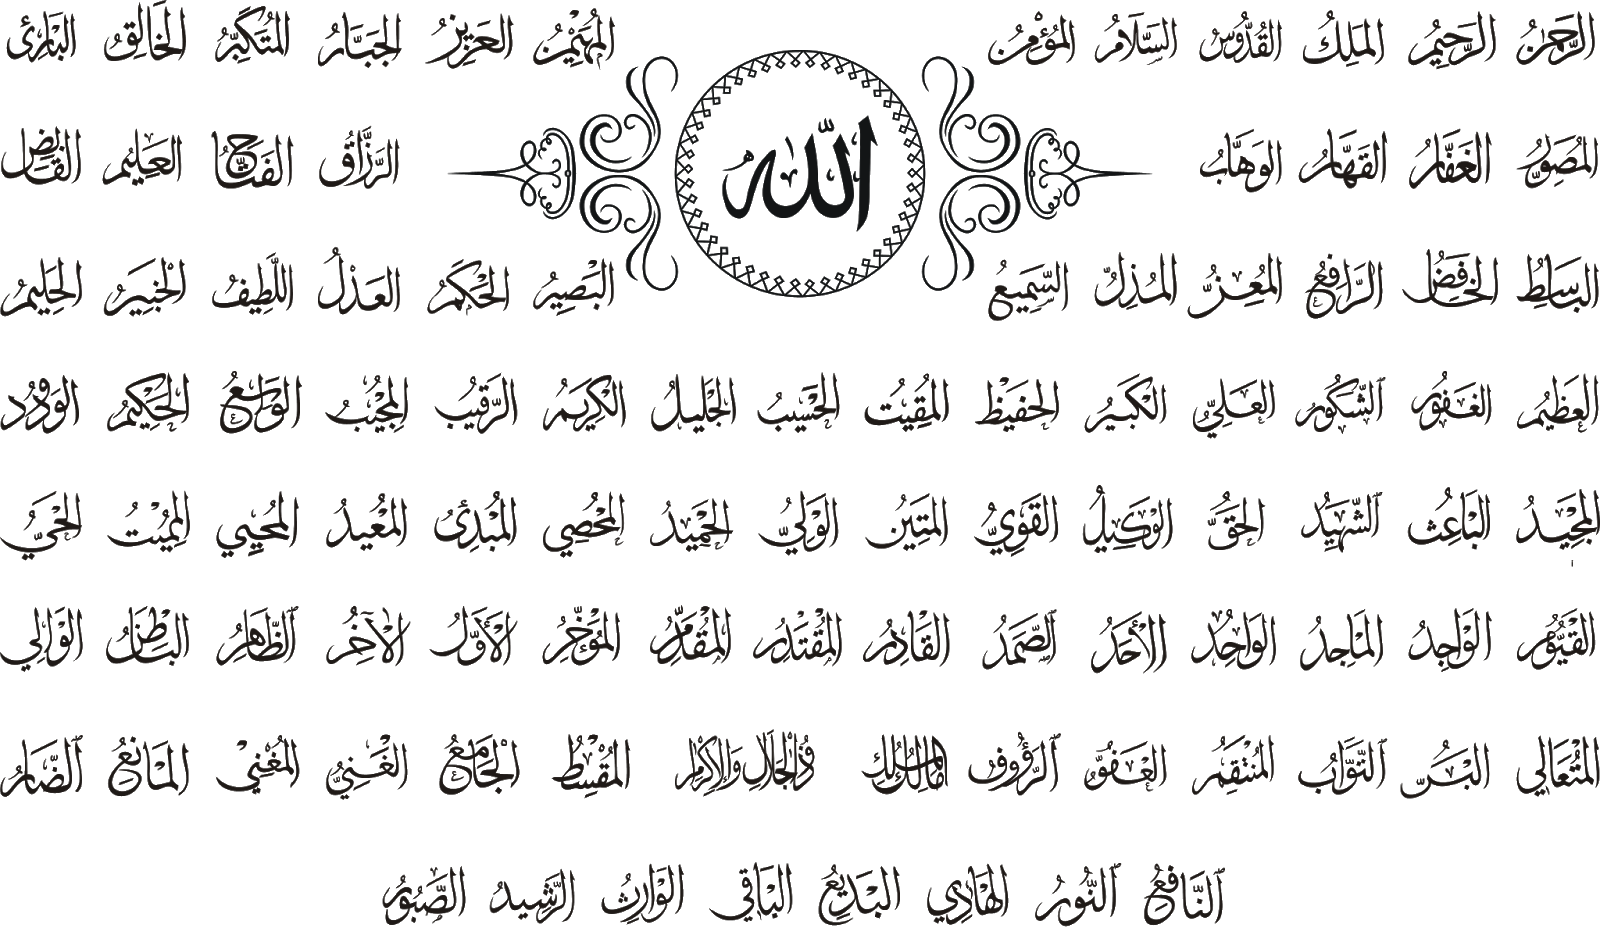 Аль 4 буквы. 99 Имен Аллаха на арабском вектор. 99 Имен Аллаха каллиграфия. 99 Имен Аллаха на арабском языке с транскрипцией. 99 Имён Аллаха на арабском.